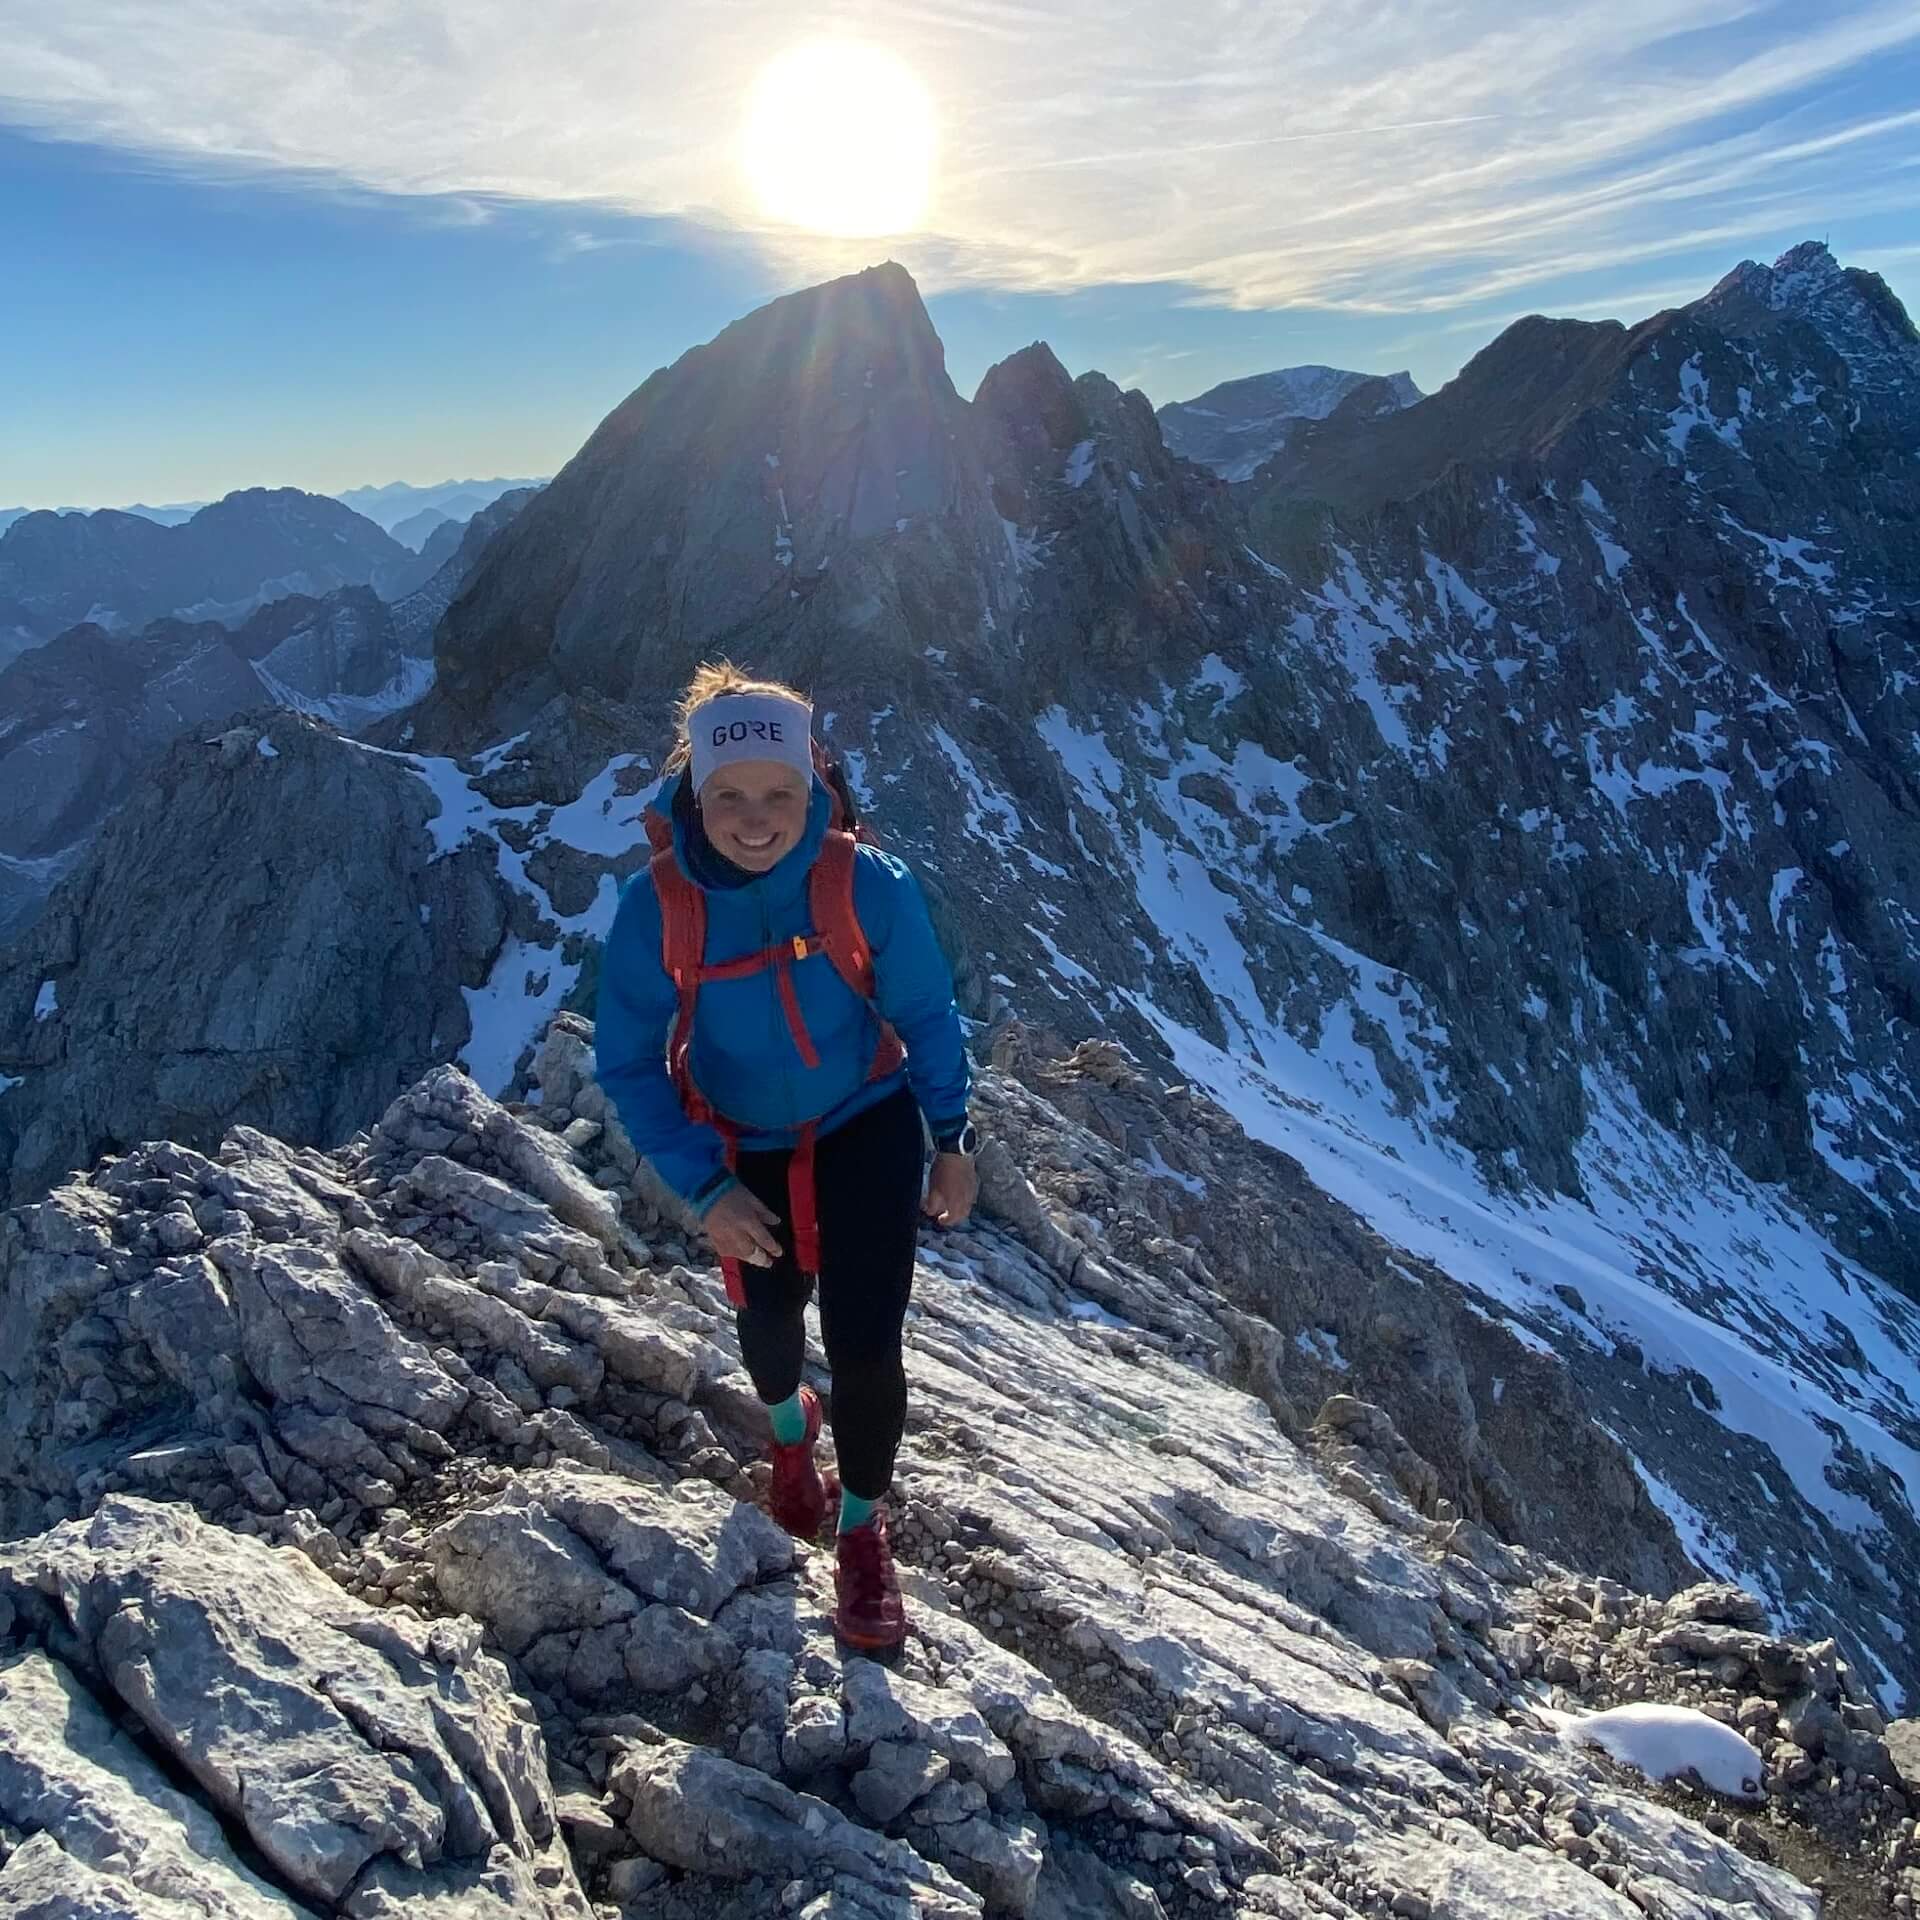 XtraMile athlete woman hiking mountain landscape smiling